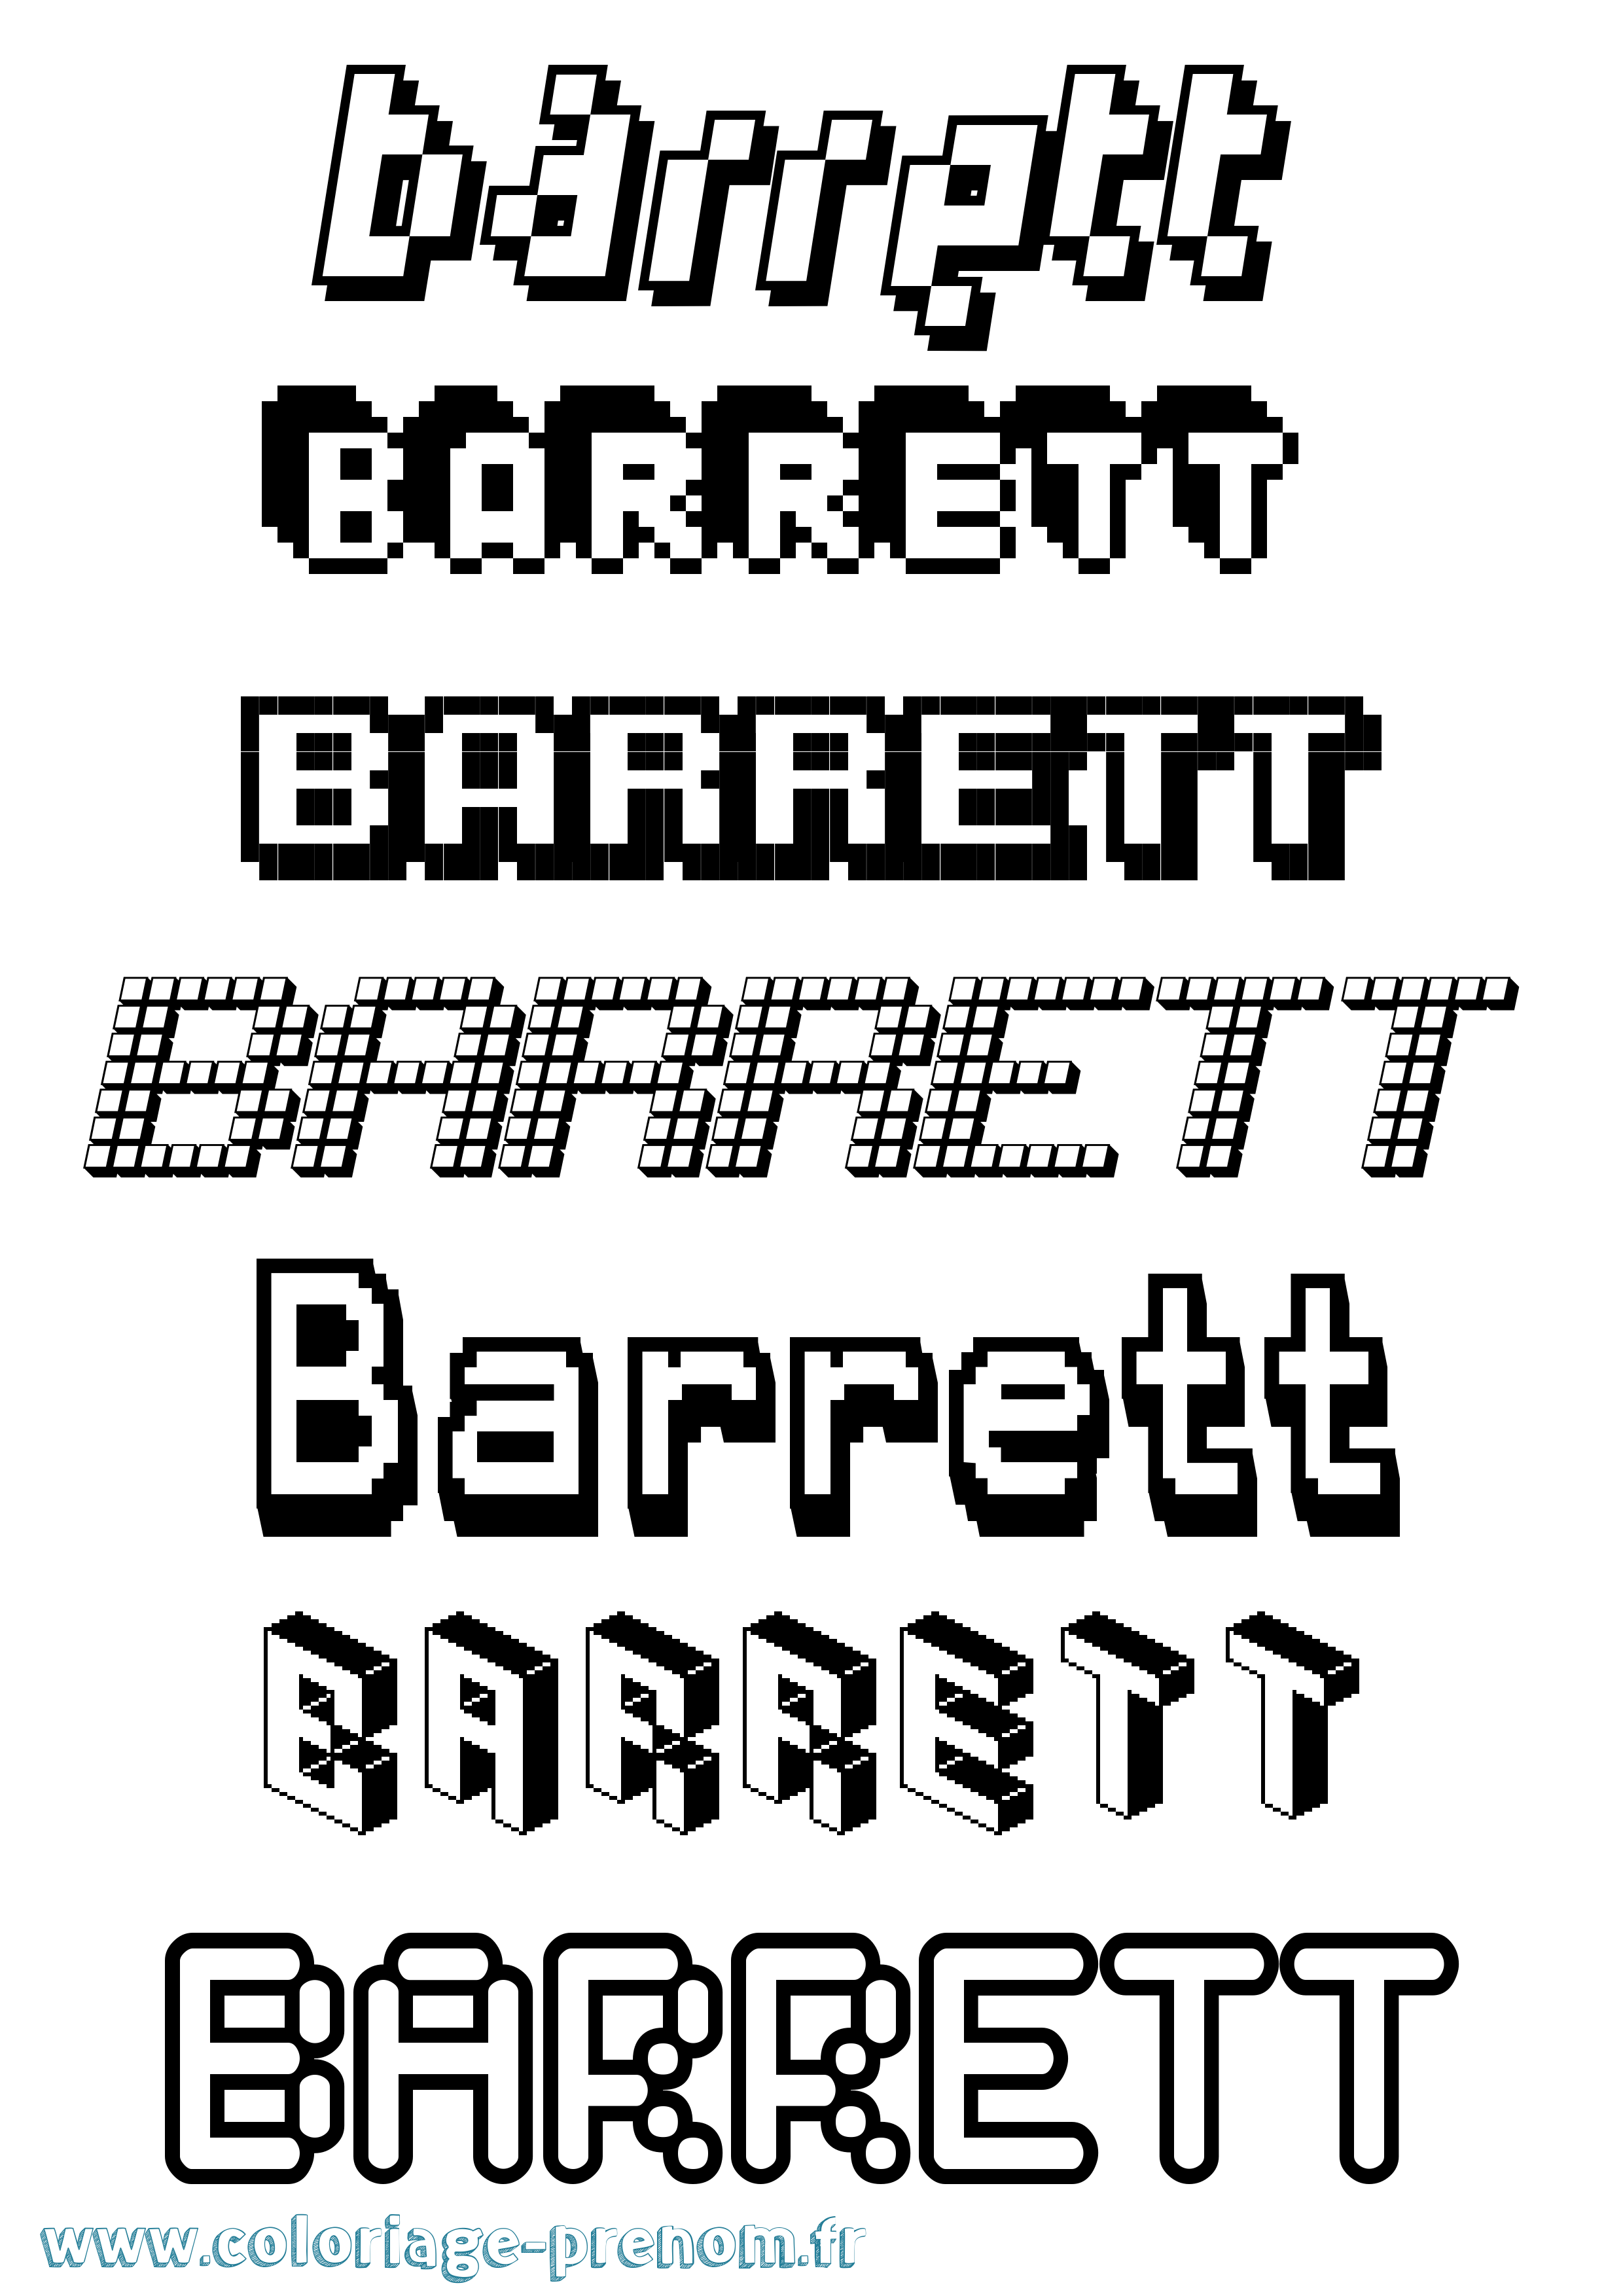 Coloriage prénom Barrett Pixel